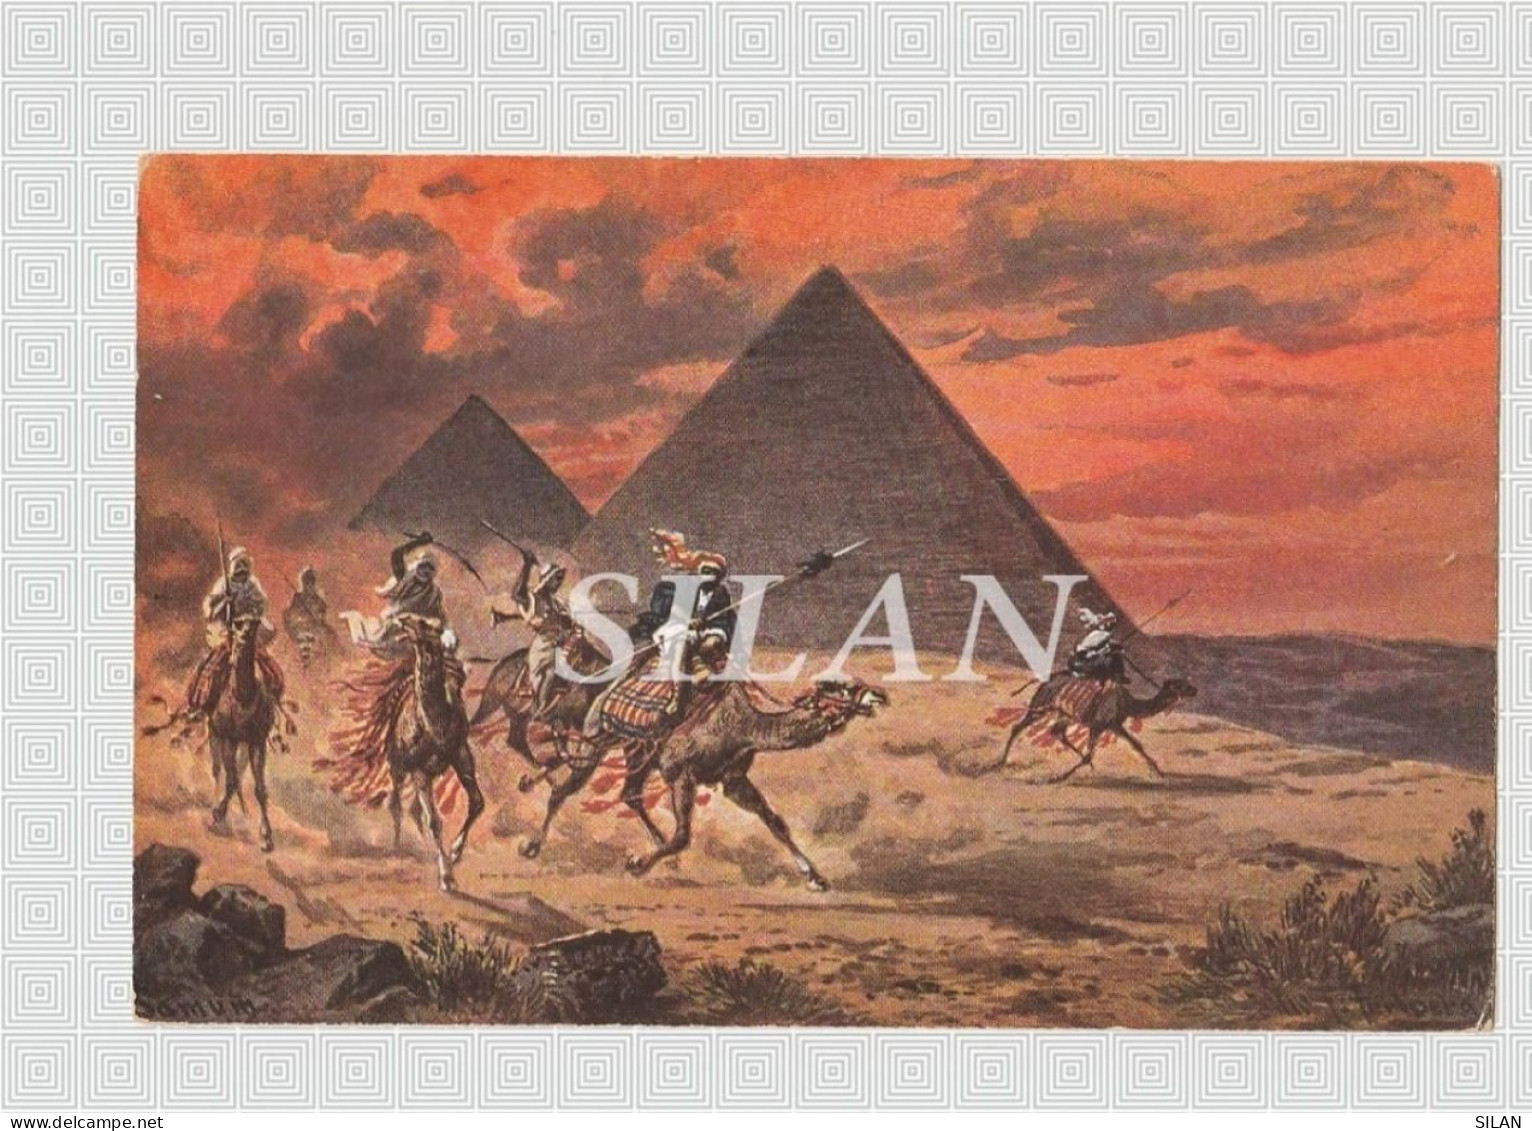 Postal Antigua De Egipto, El Cairo. Pirámides, Desierto, Río Nilo/Ancient Postcard From Egypt, Cairo. Pyramids, Desert, - Le Caire